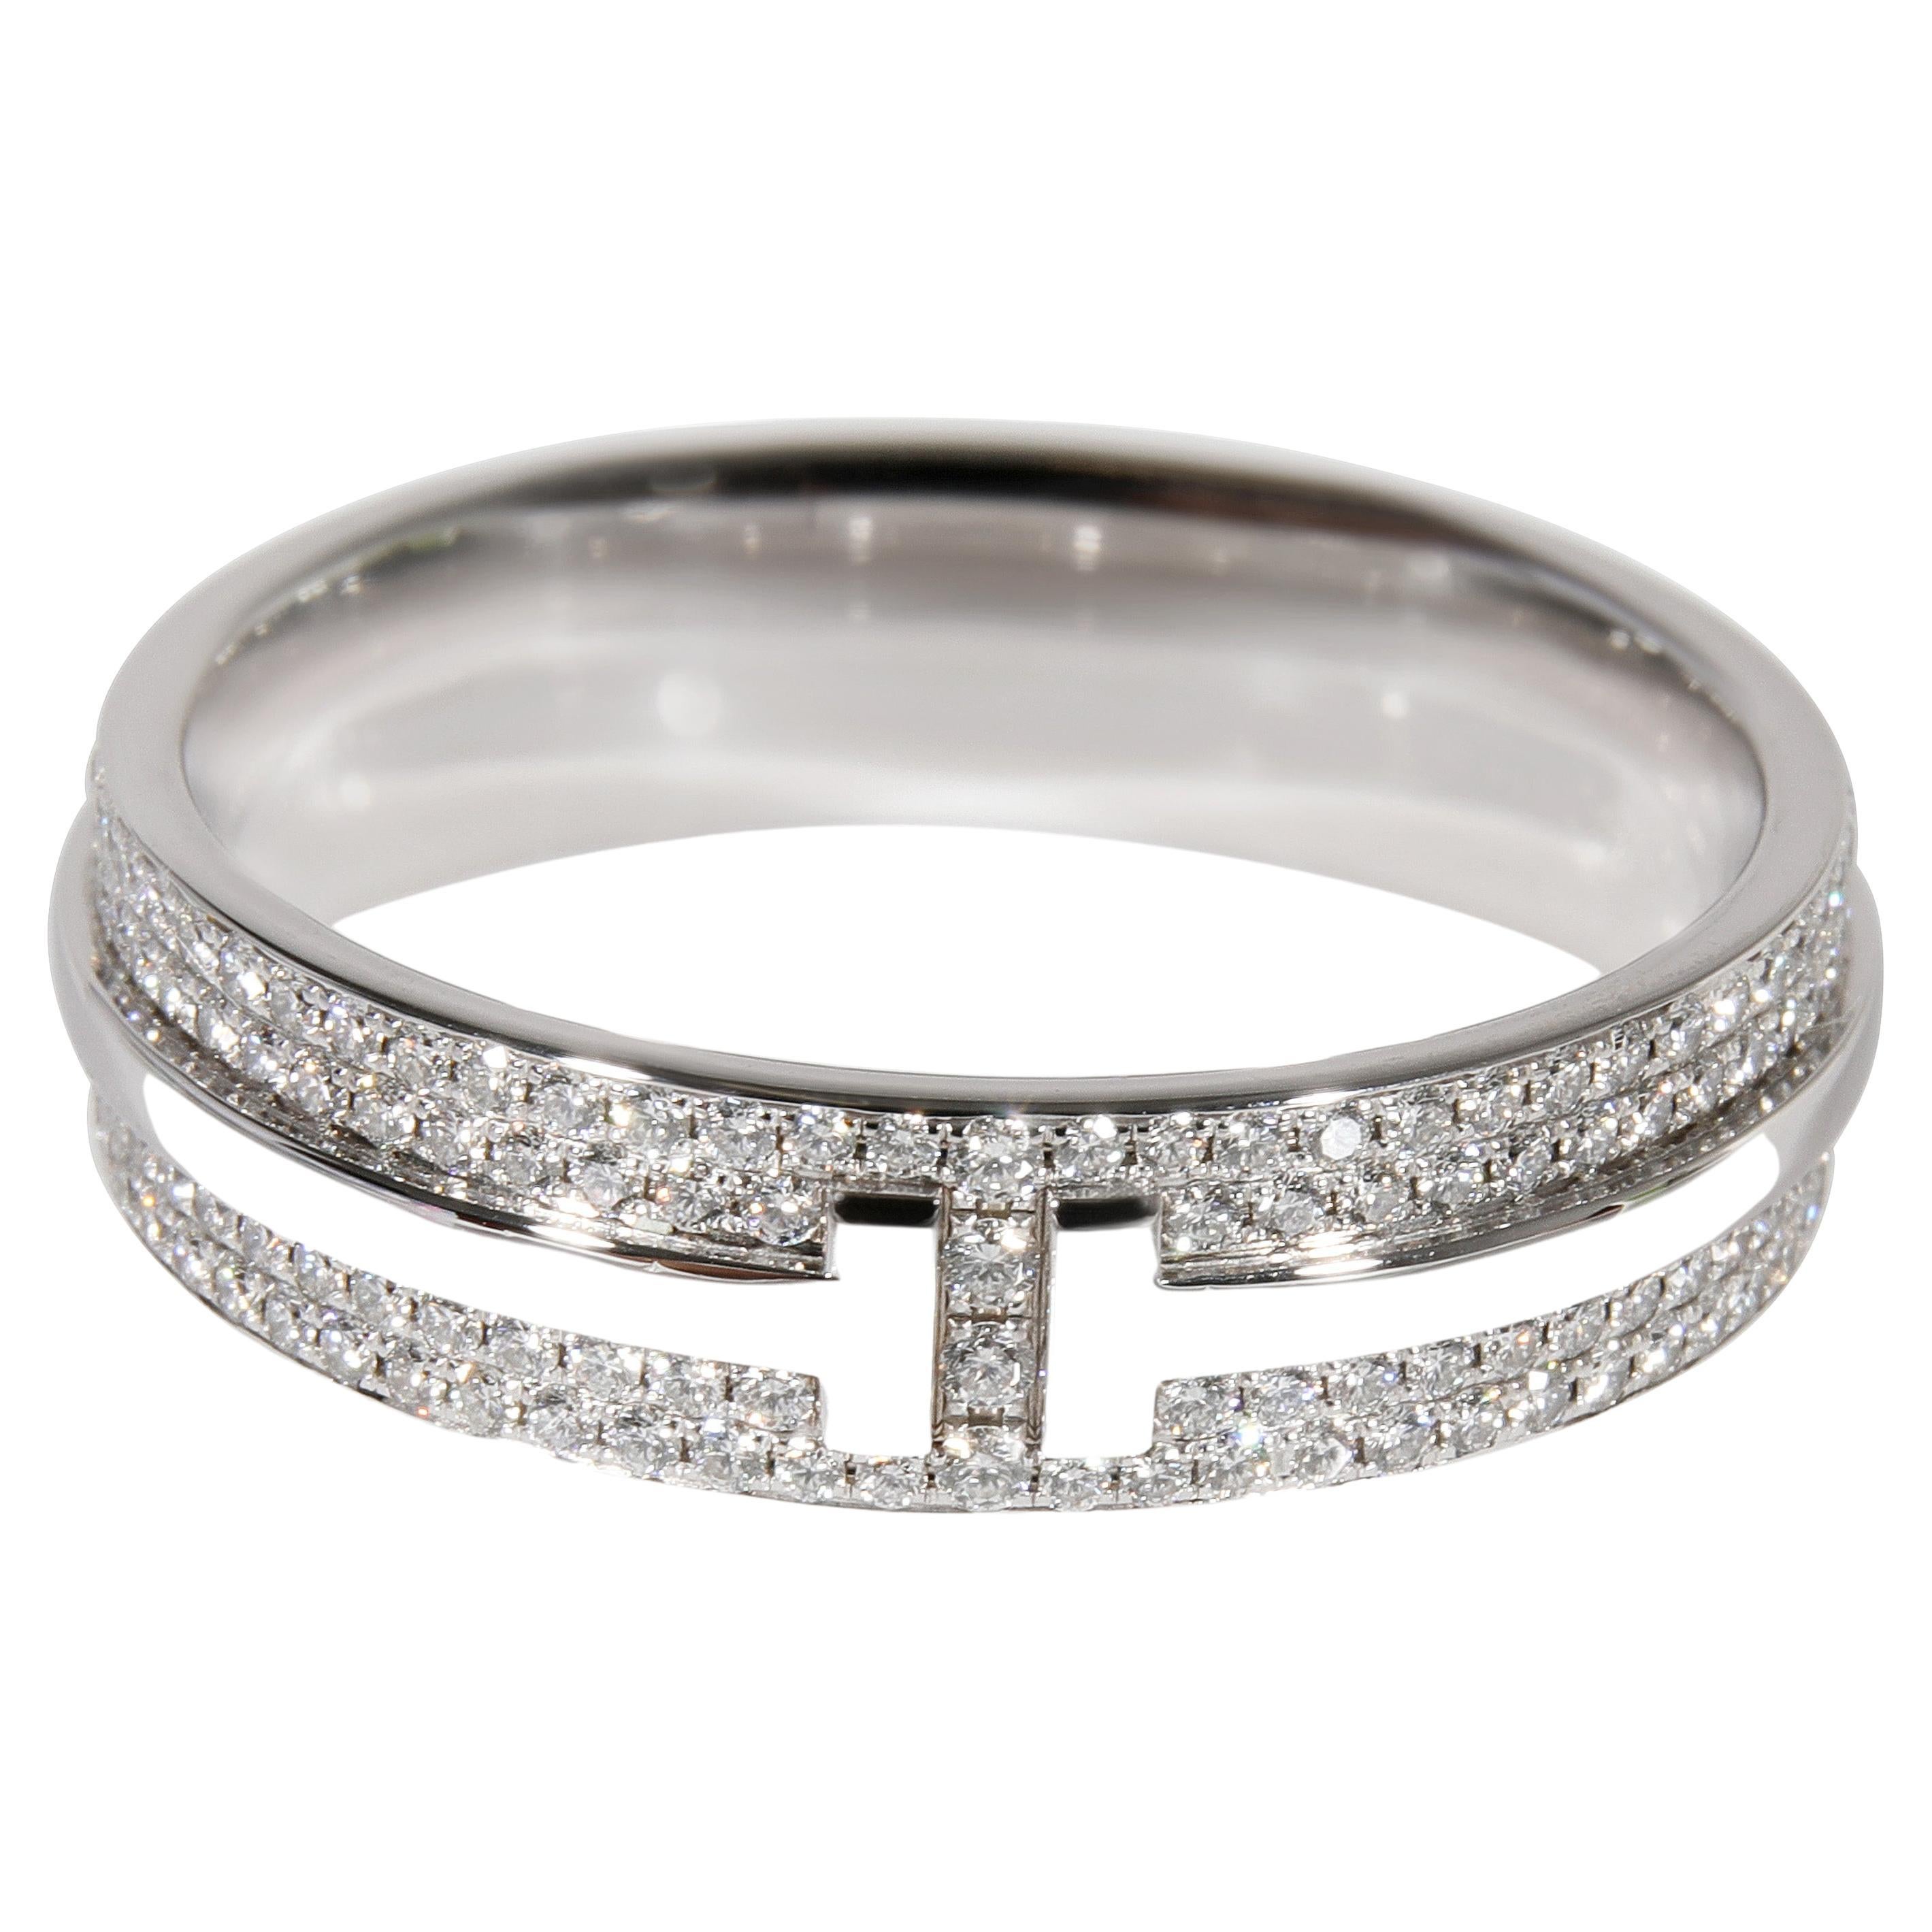 Tiffany & Co. Tiffany T Bague en or blanc 18 carats avec diamants 0,58 carat poids total